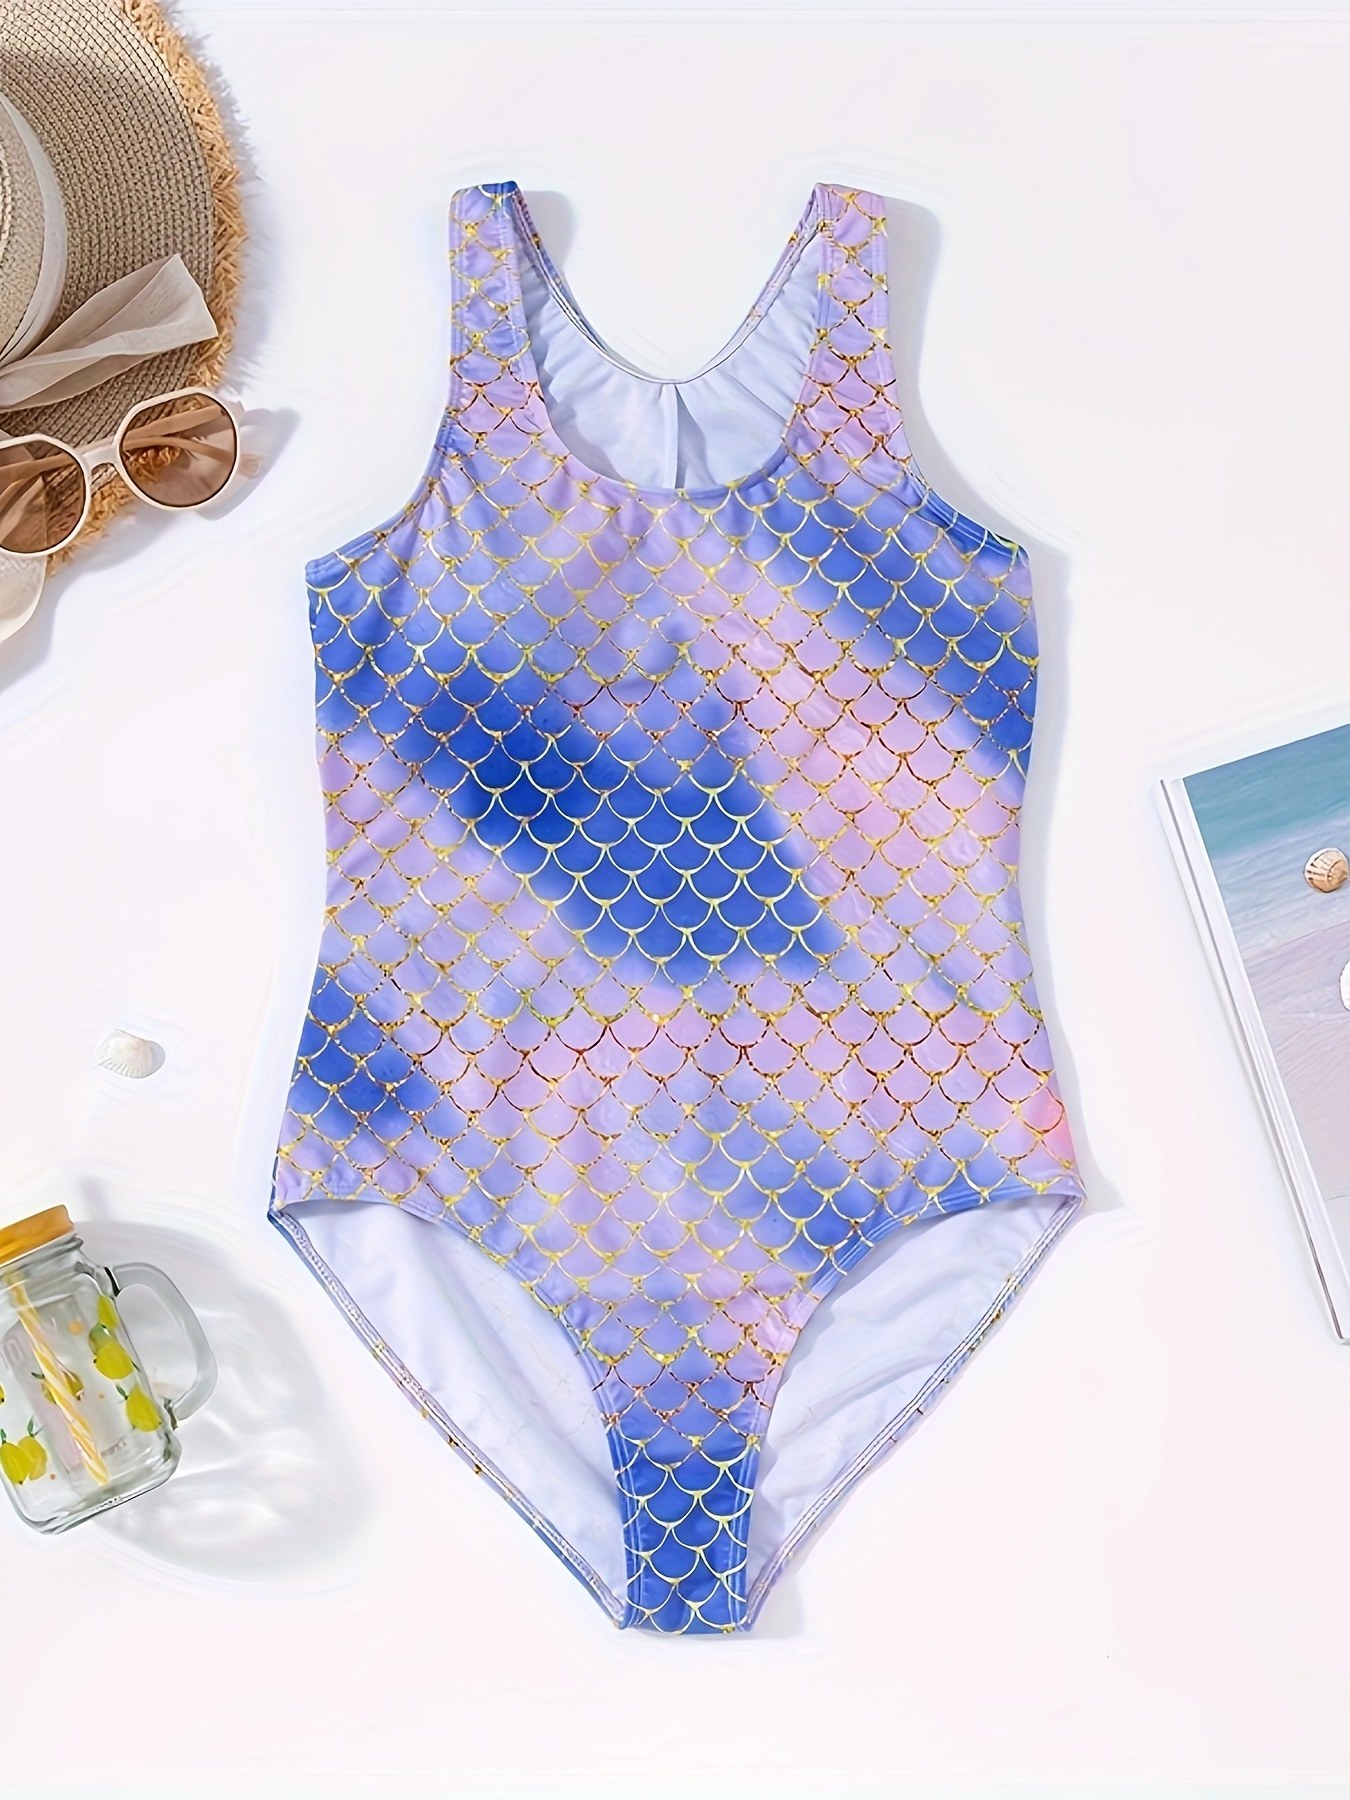 Kids One-Piece Swimwear Texture Fabric Beach Wear Monokini Bikini